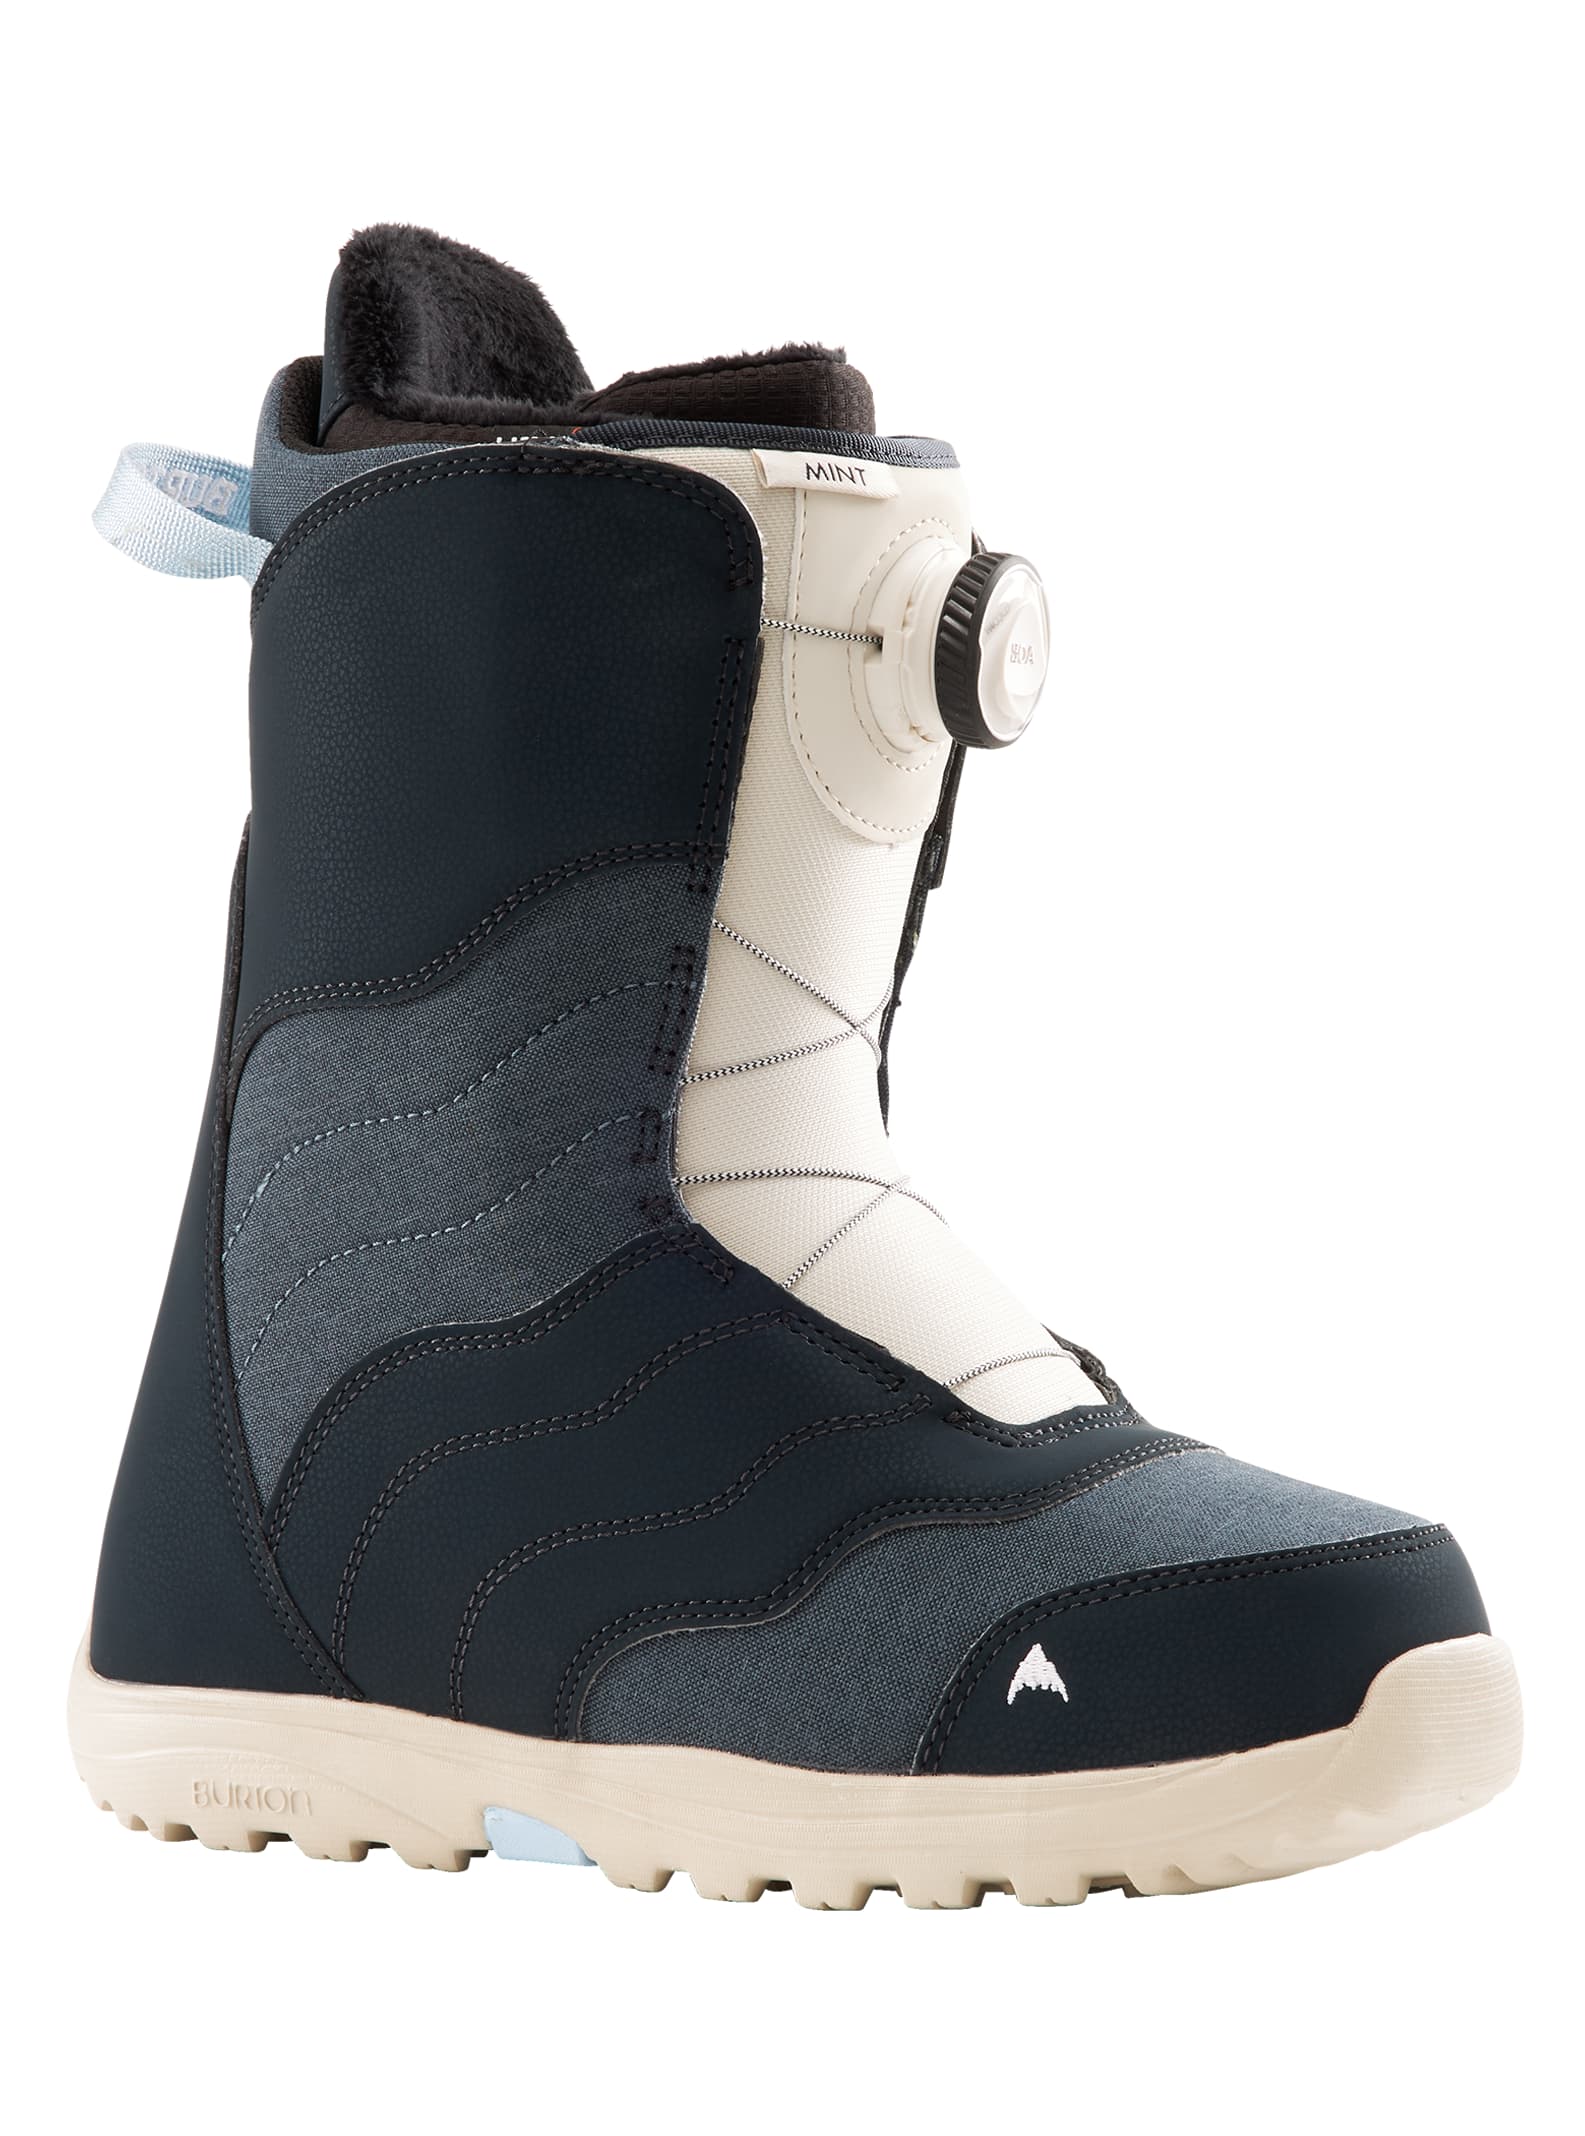 5.5 Burton Womens Mint Boa Snowboard Boots Black 